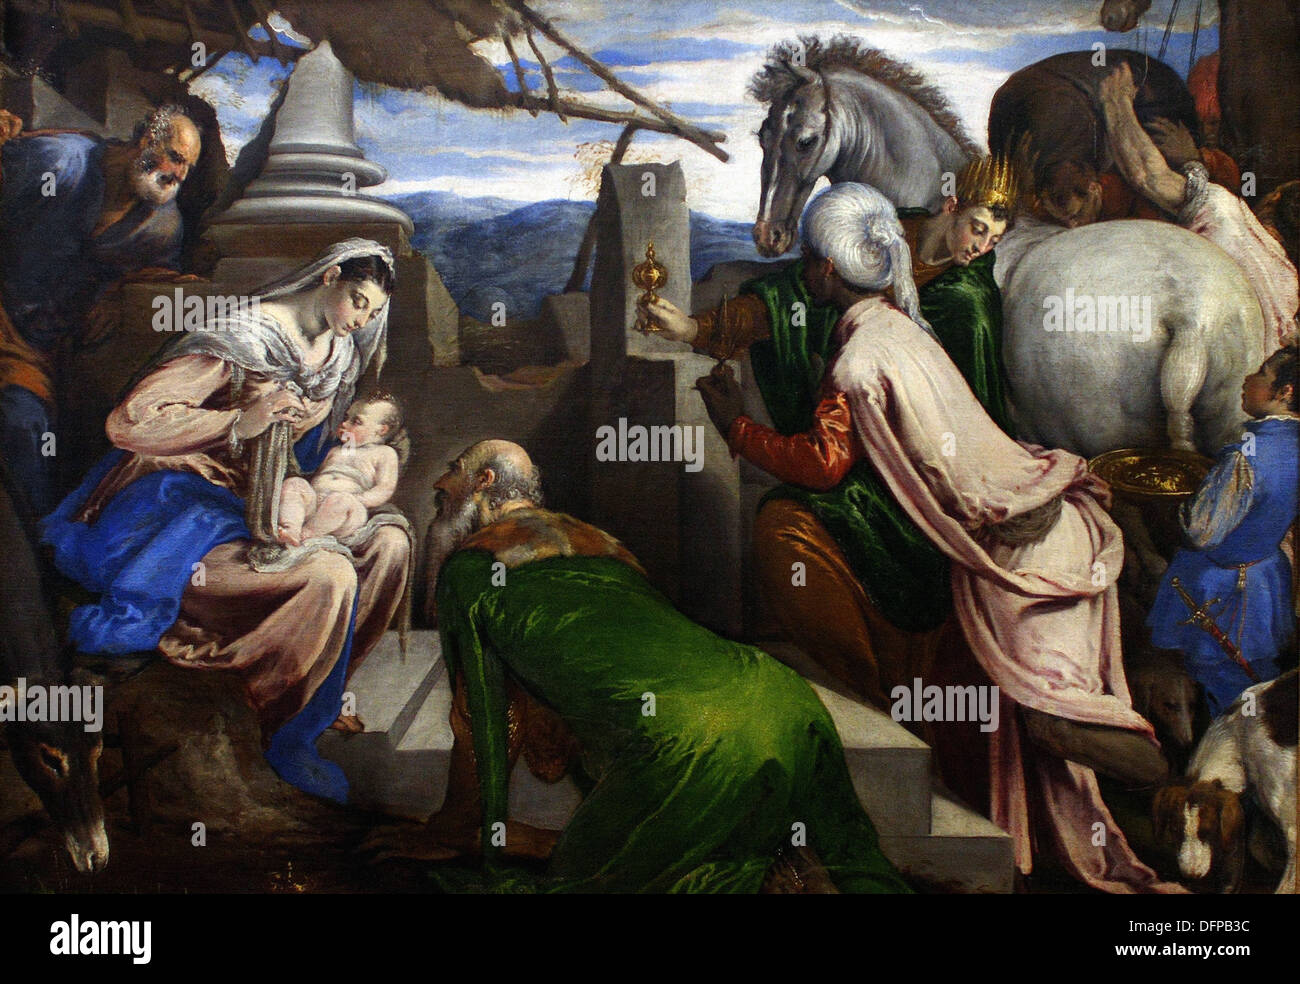 Jacopo da PONTE - Adoration de Kings - 1564 - Kunsthistoriches Museum - Vienna Stock Photo